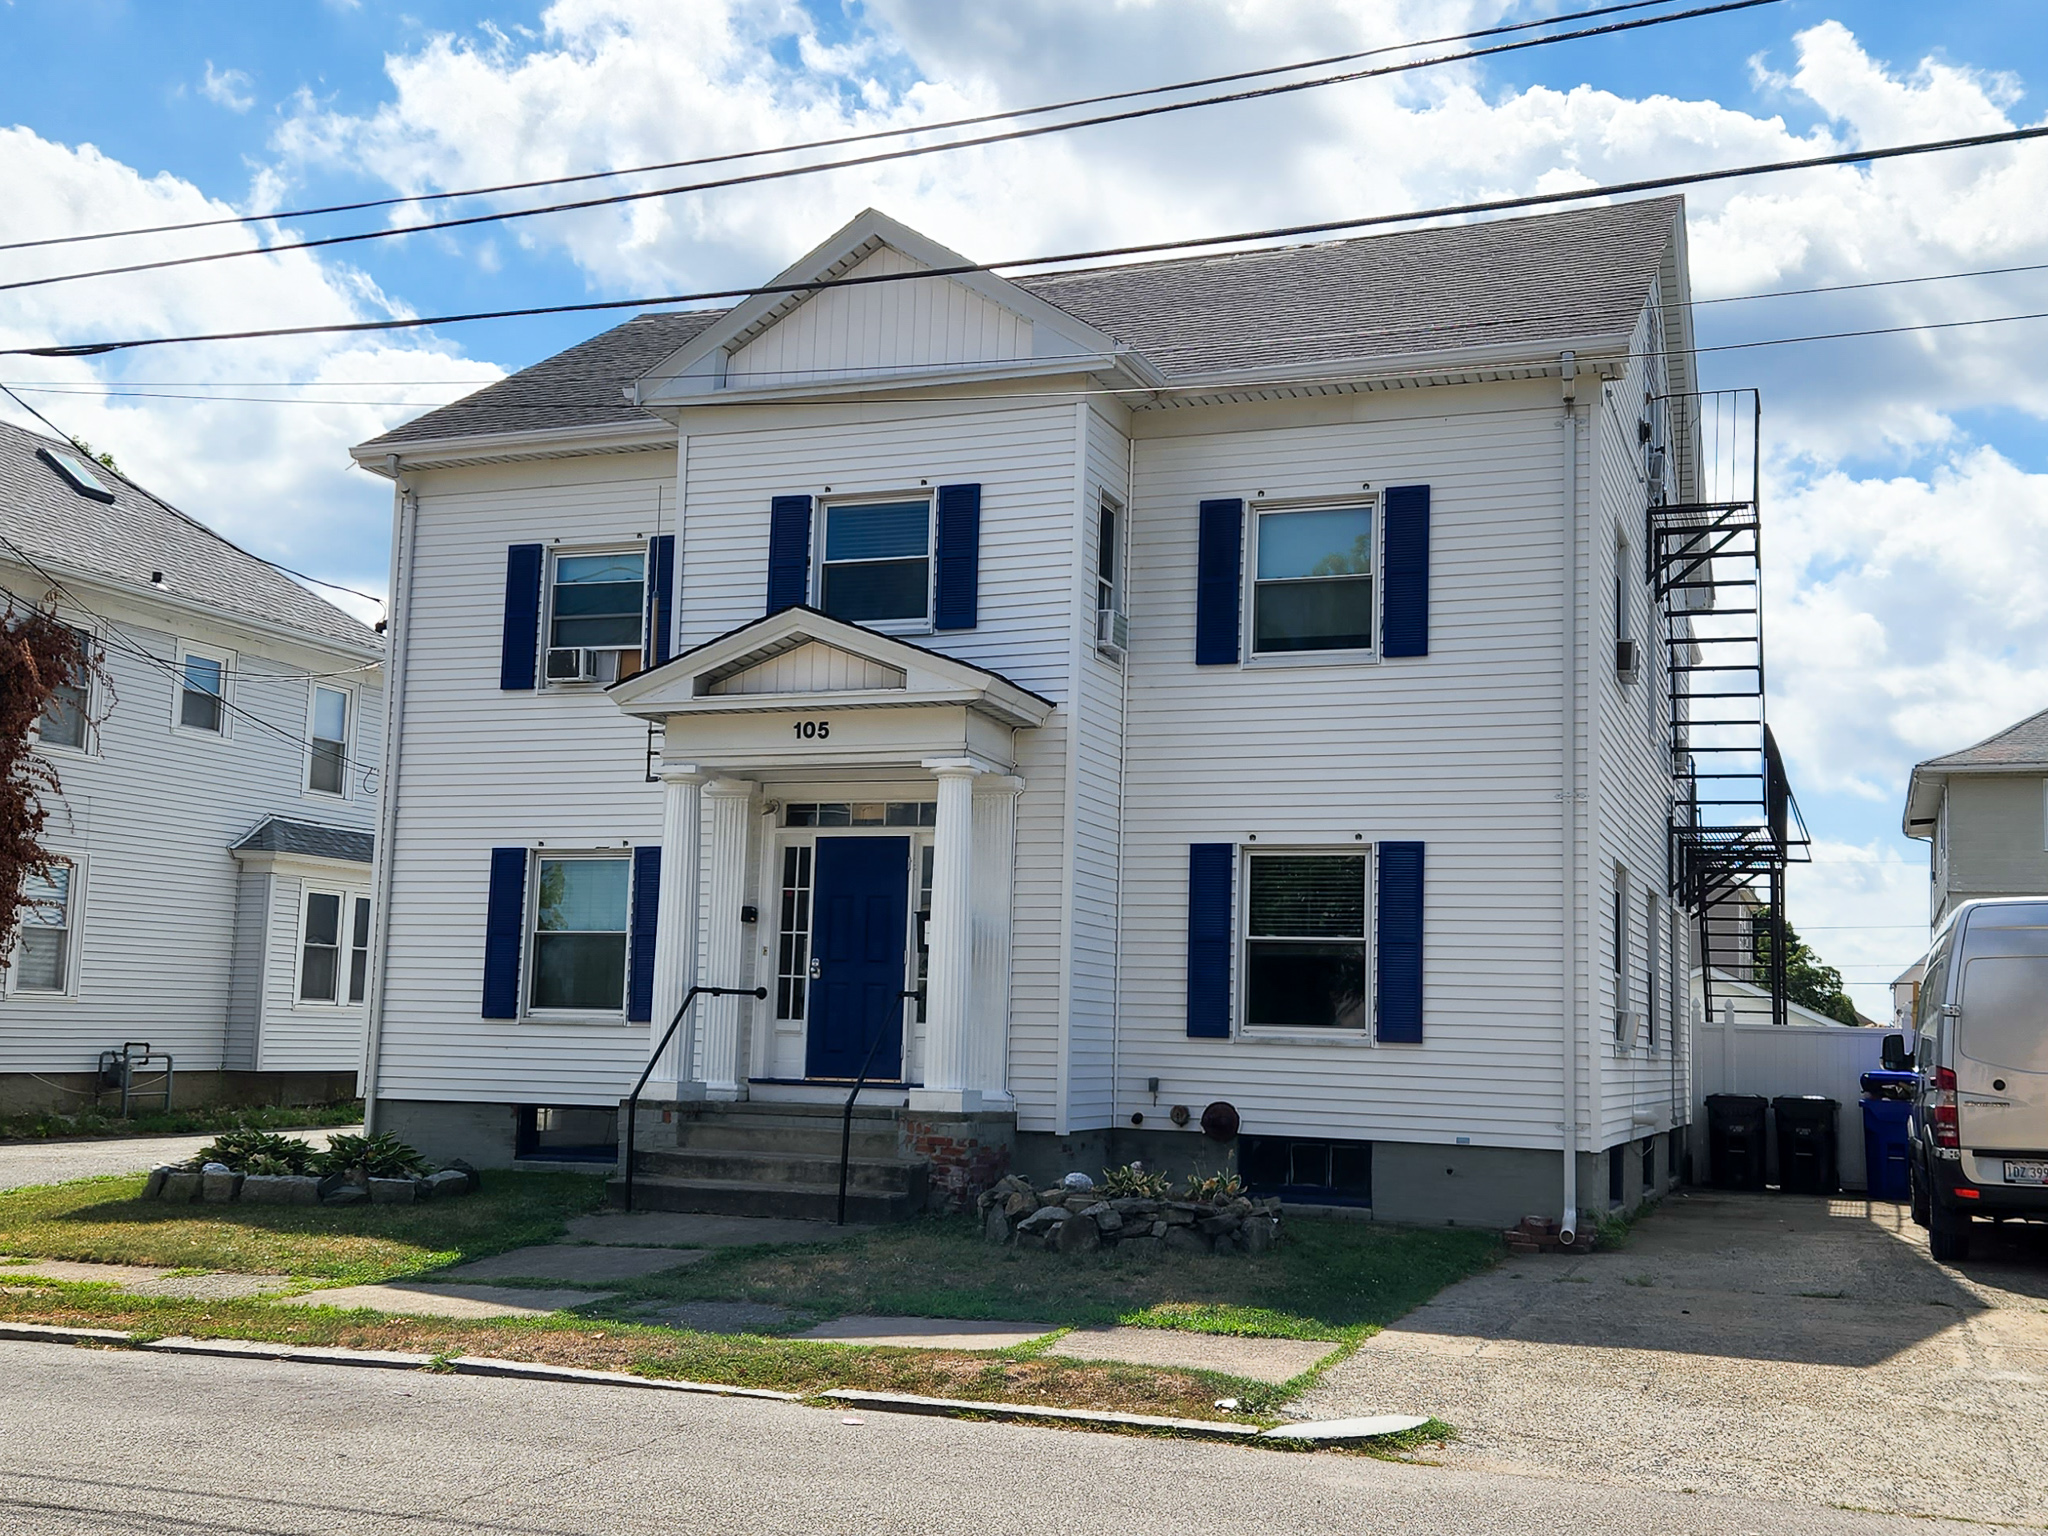 Kayaly Sober House | Sober Living for Men in Pawtucket, Rhode Island